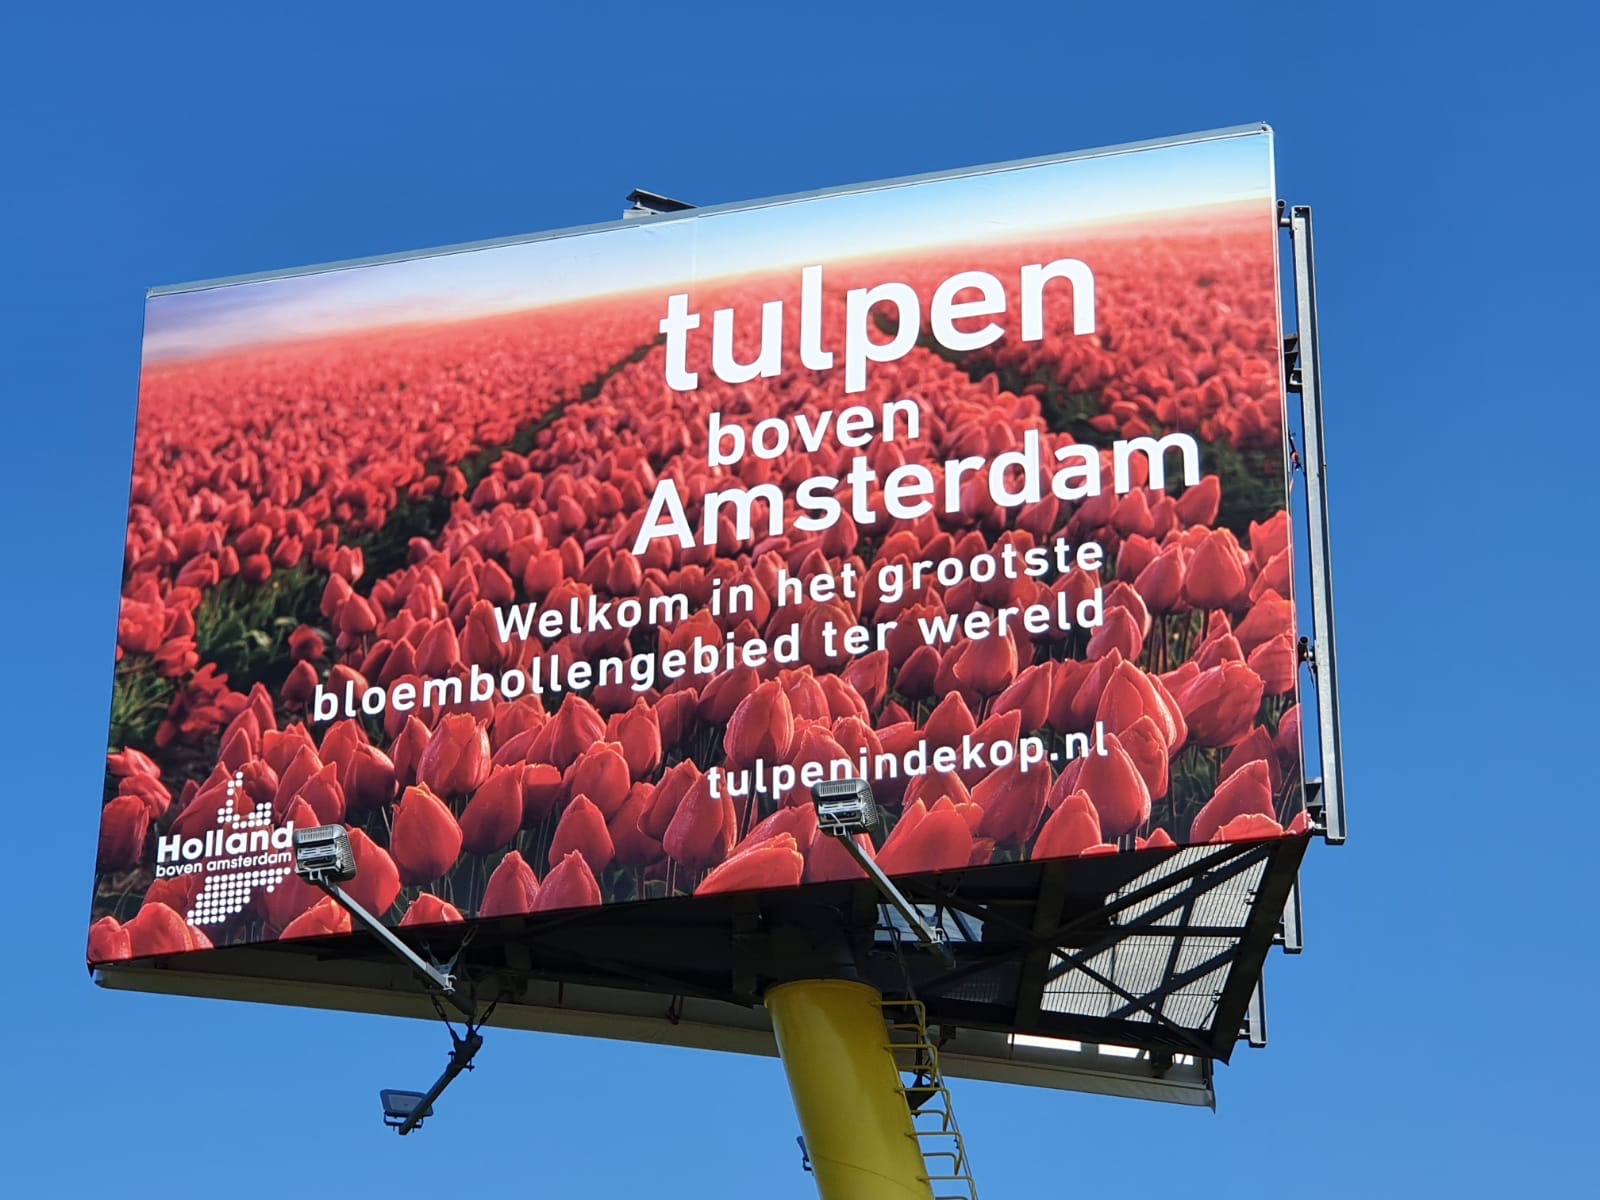 Tulpen boven Amsterdam